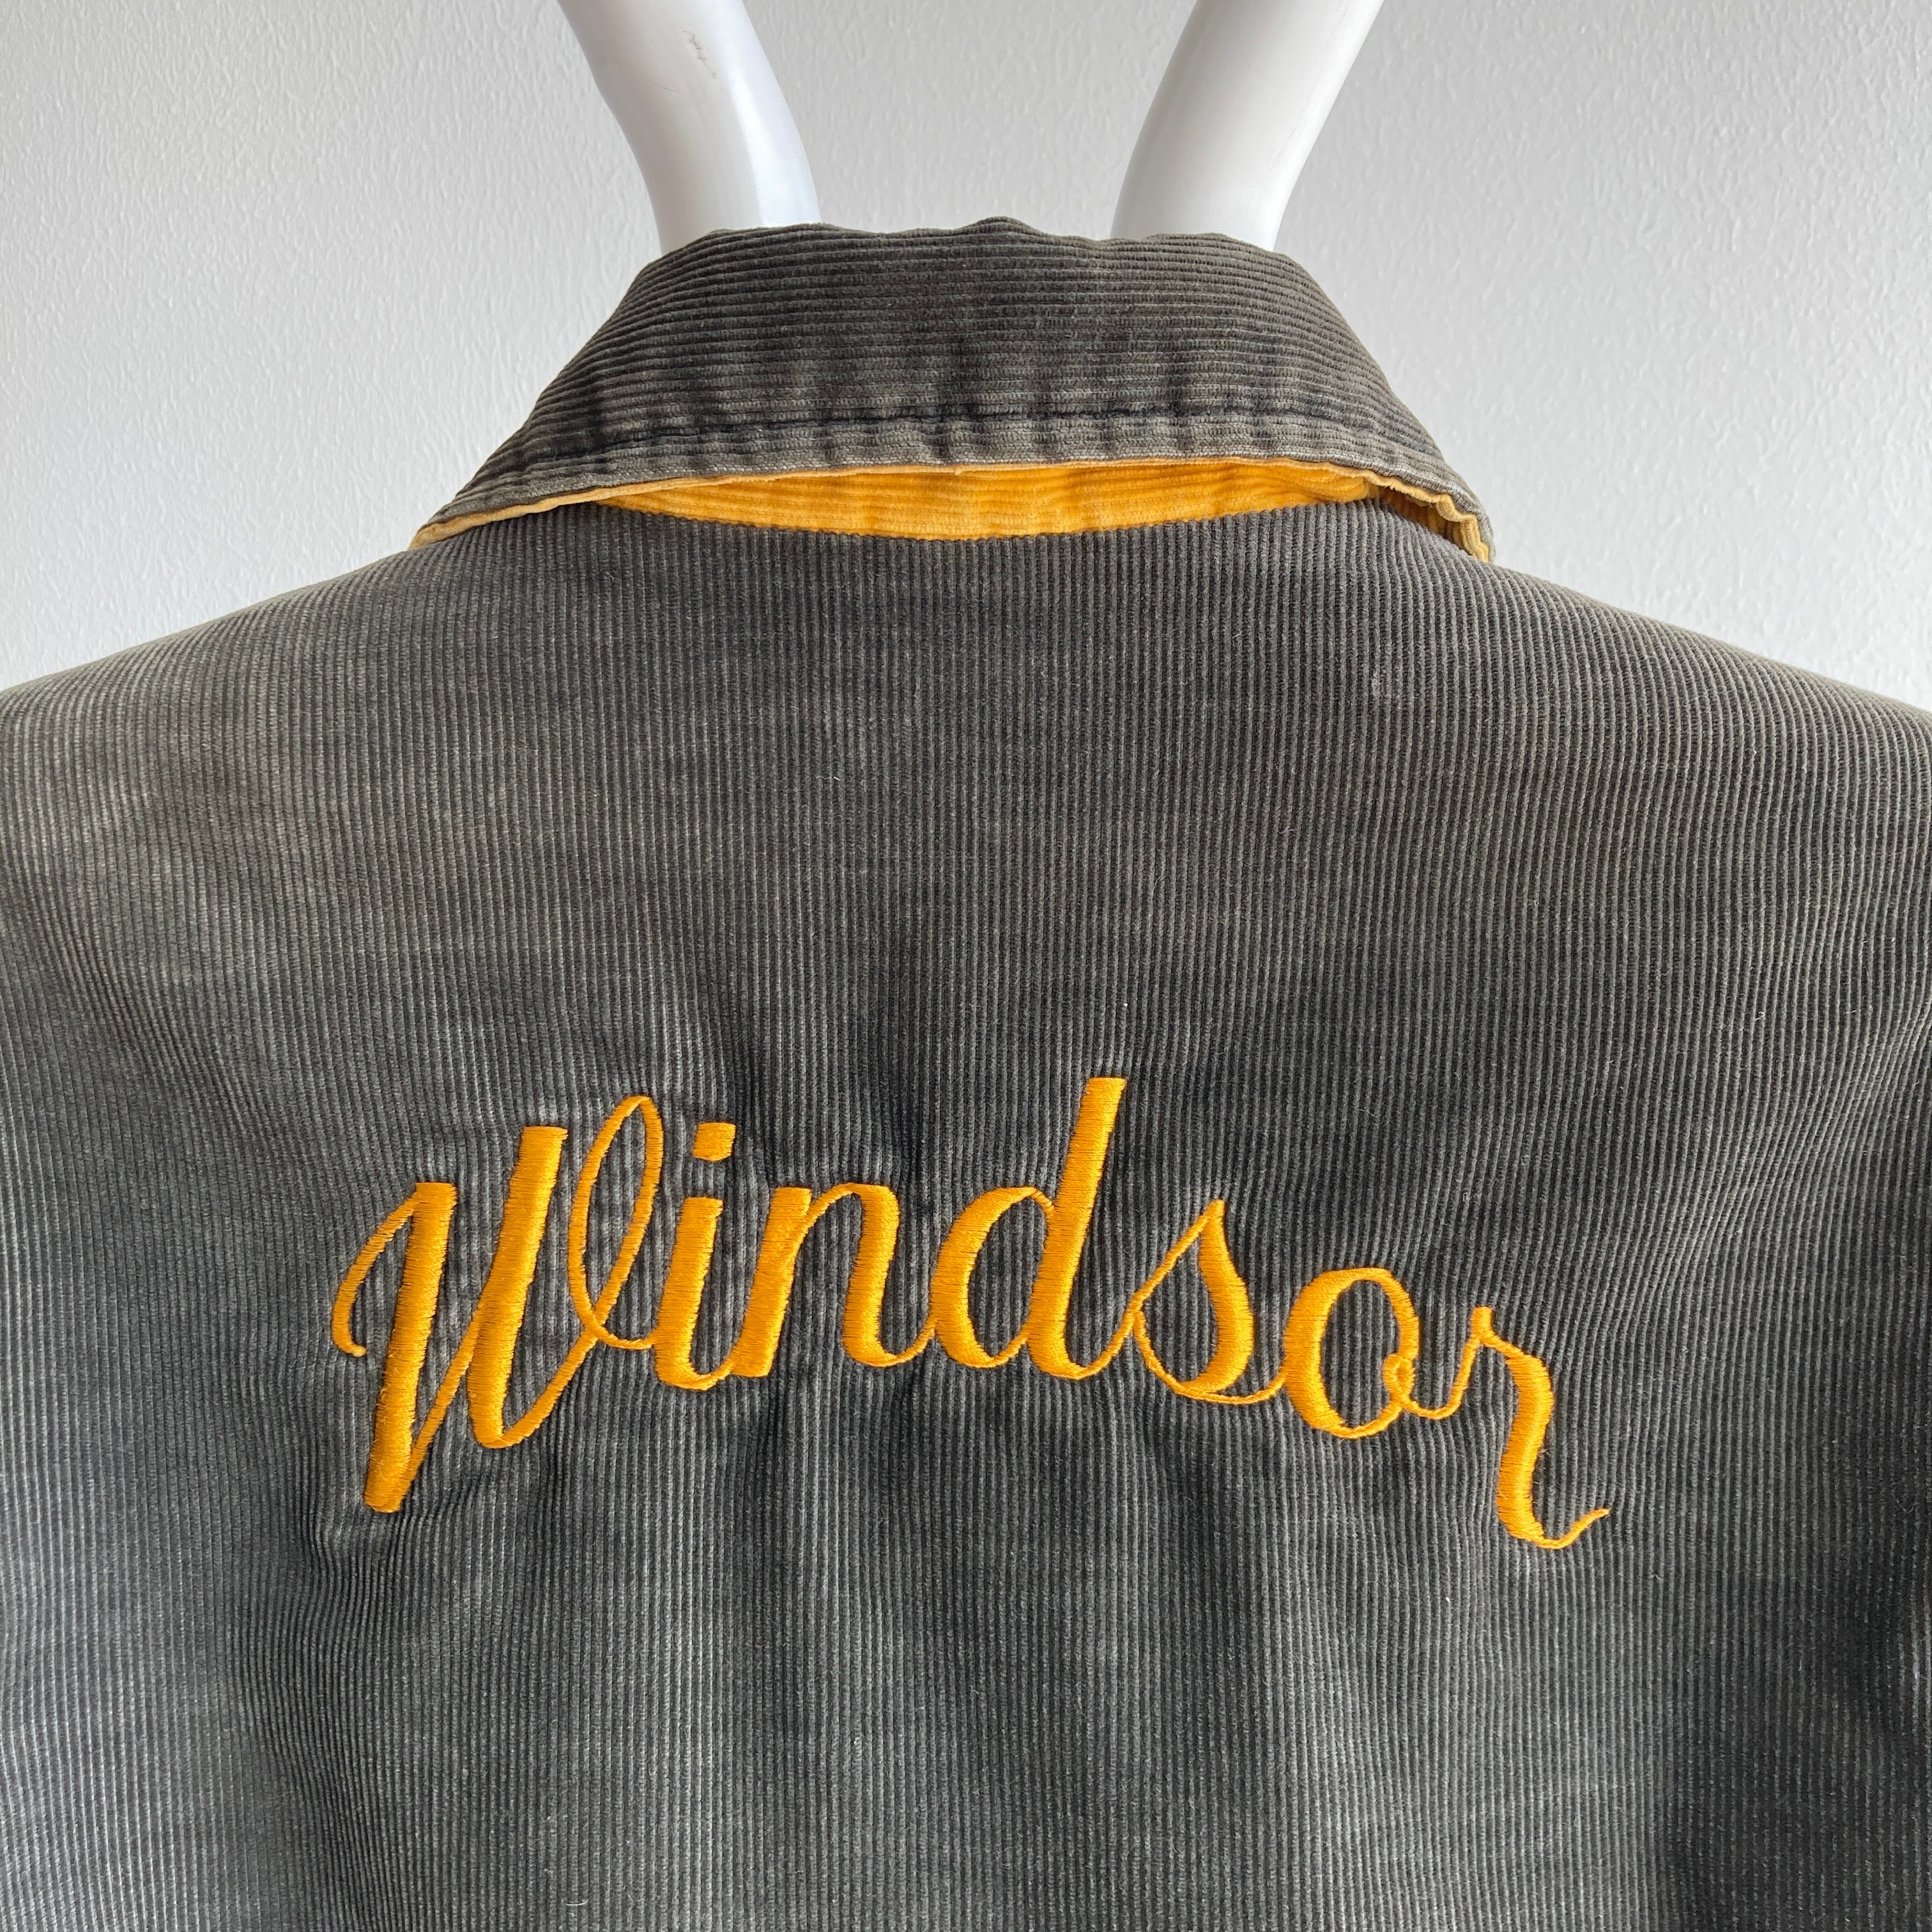 1970's Corduroy Letter Jacket That Belonged To Jamey - Windsor On Backside